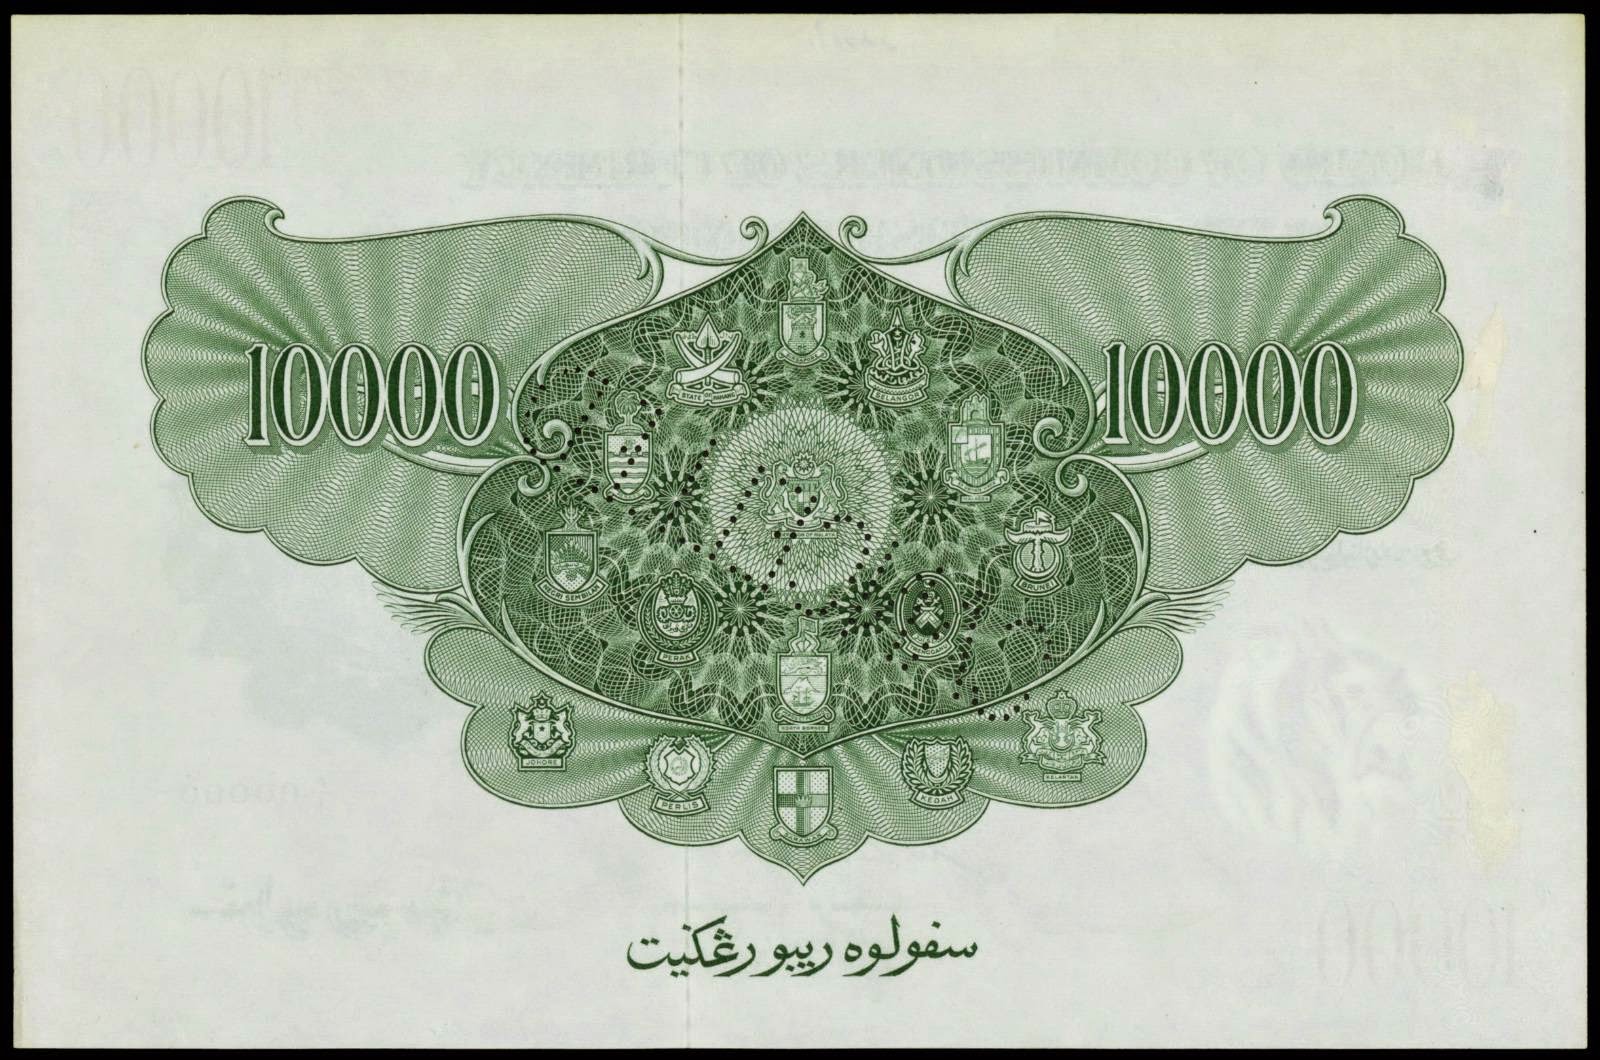 Malaya & British Borneo Ten Thousand Dollars banknote